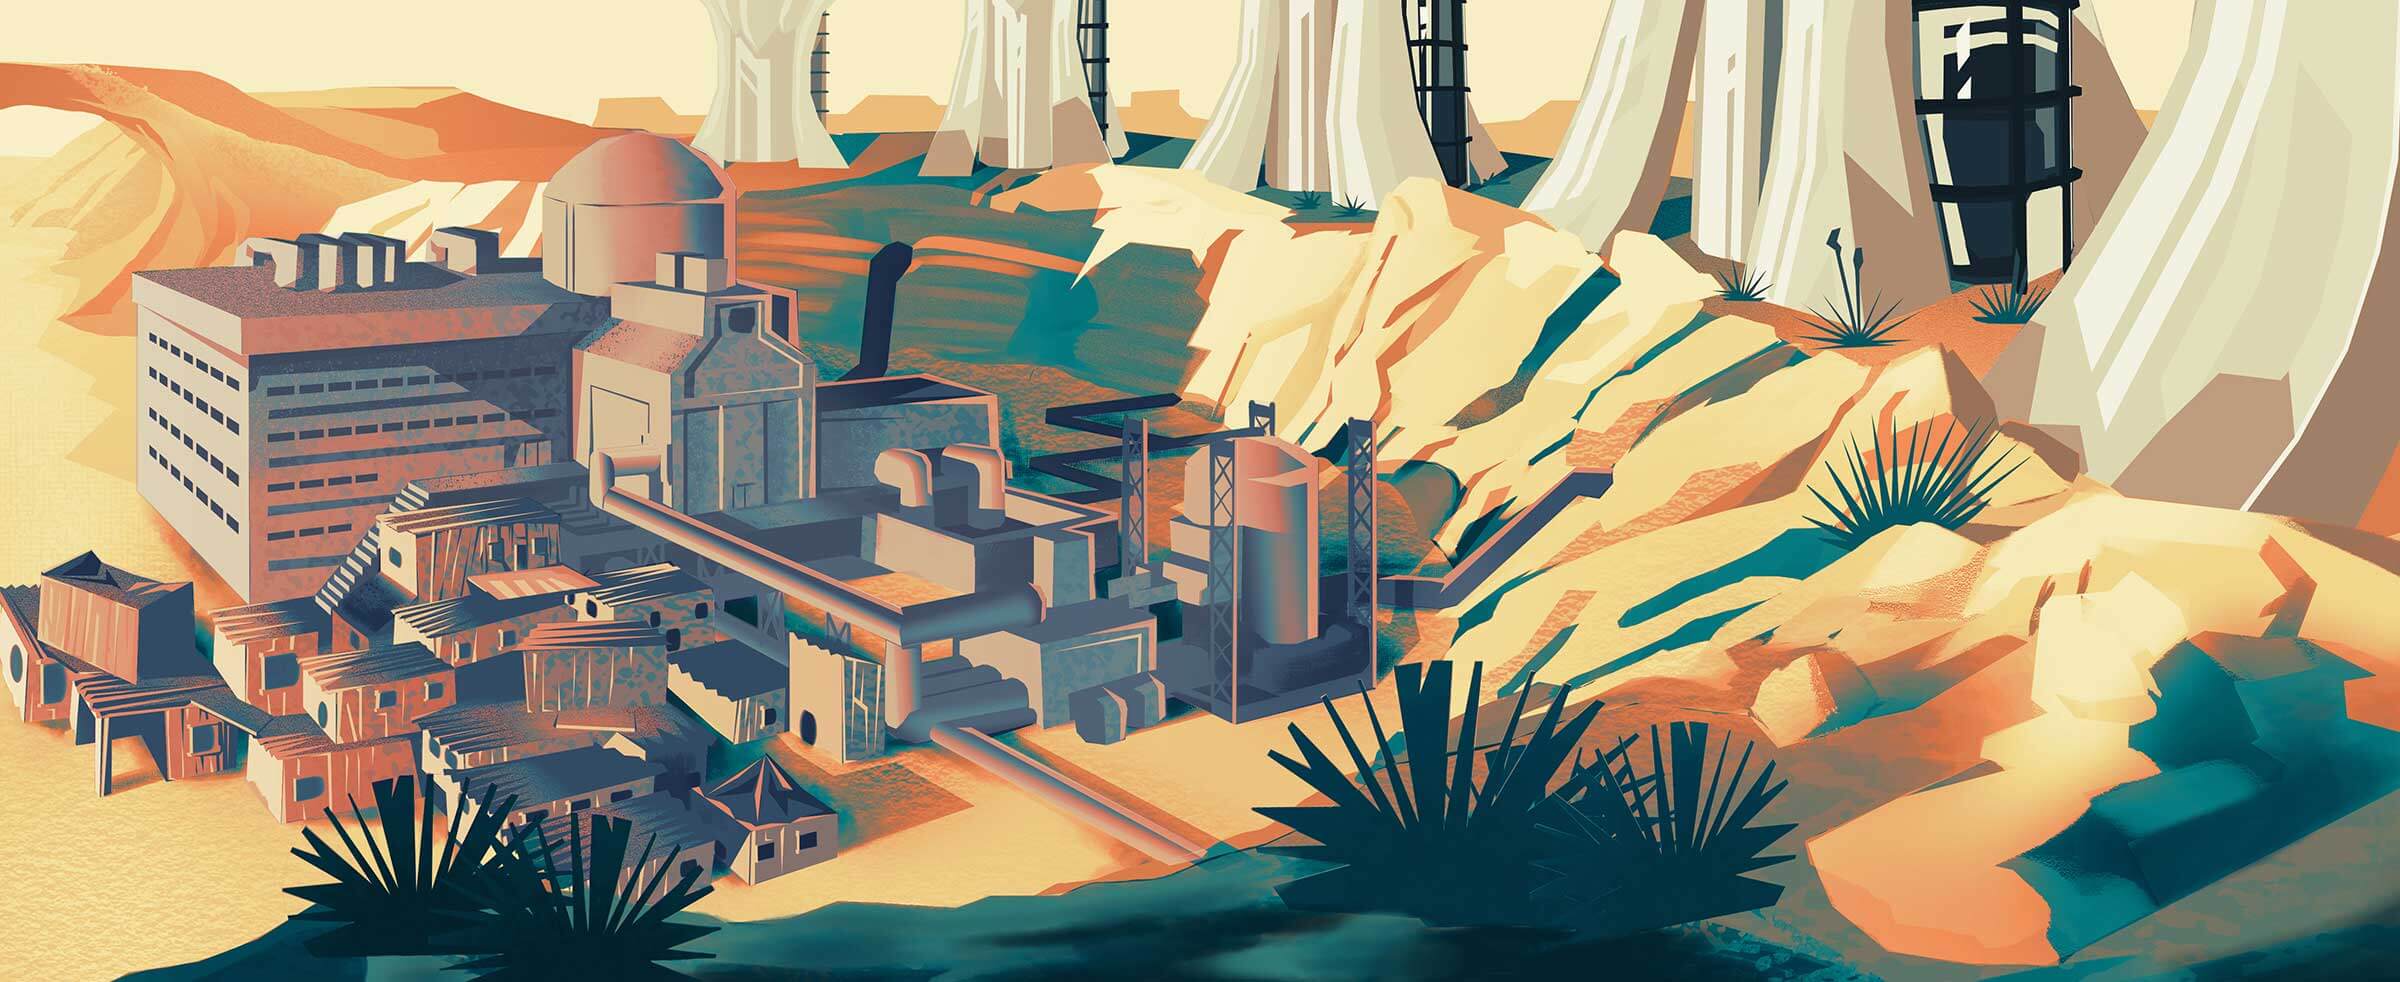 An industrial complex nestled along the mountains of a desert.